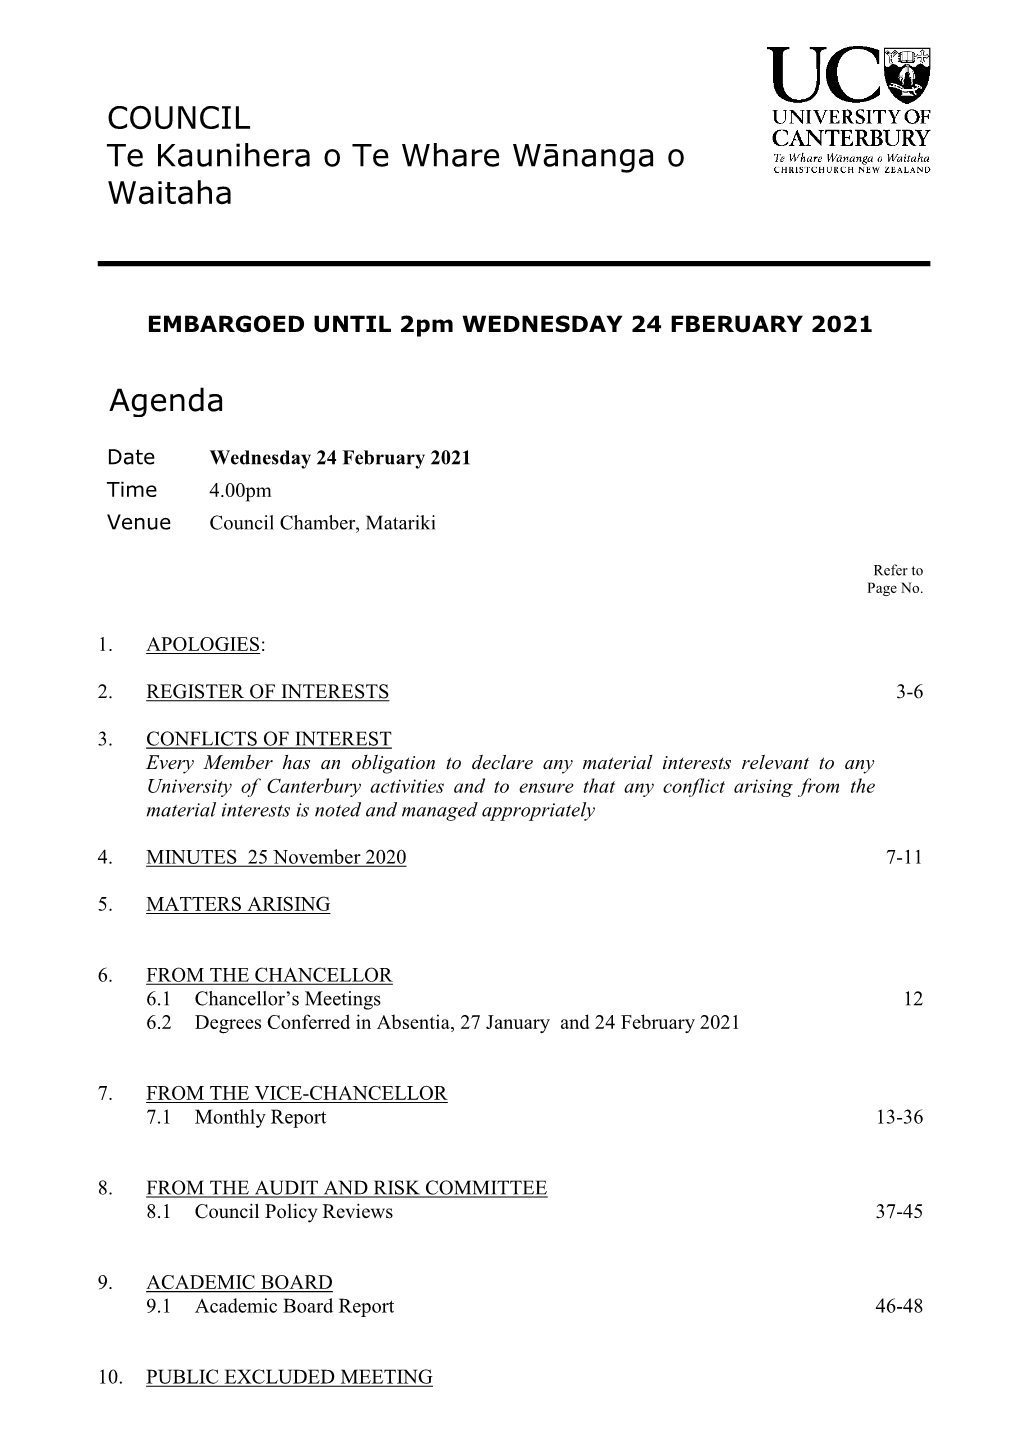 Council Agenda 24 February 2021